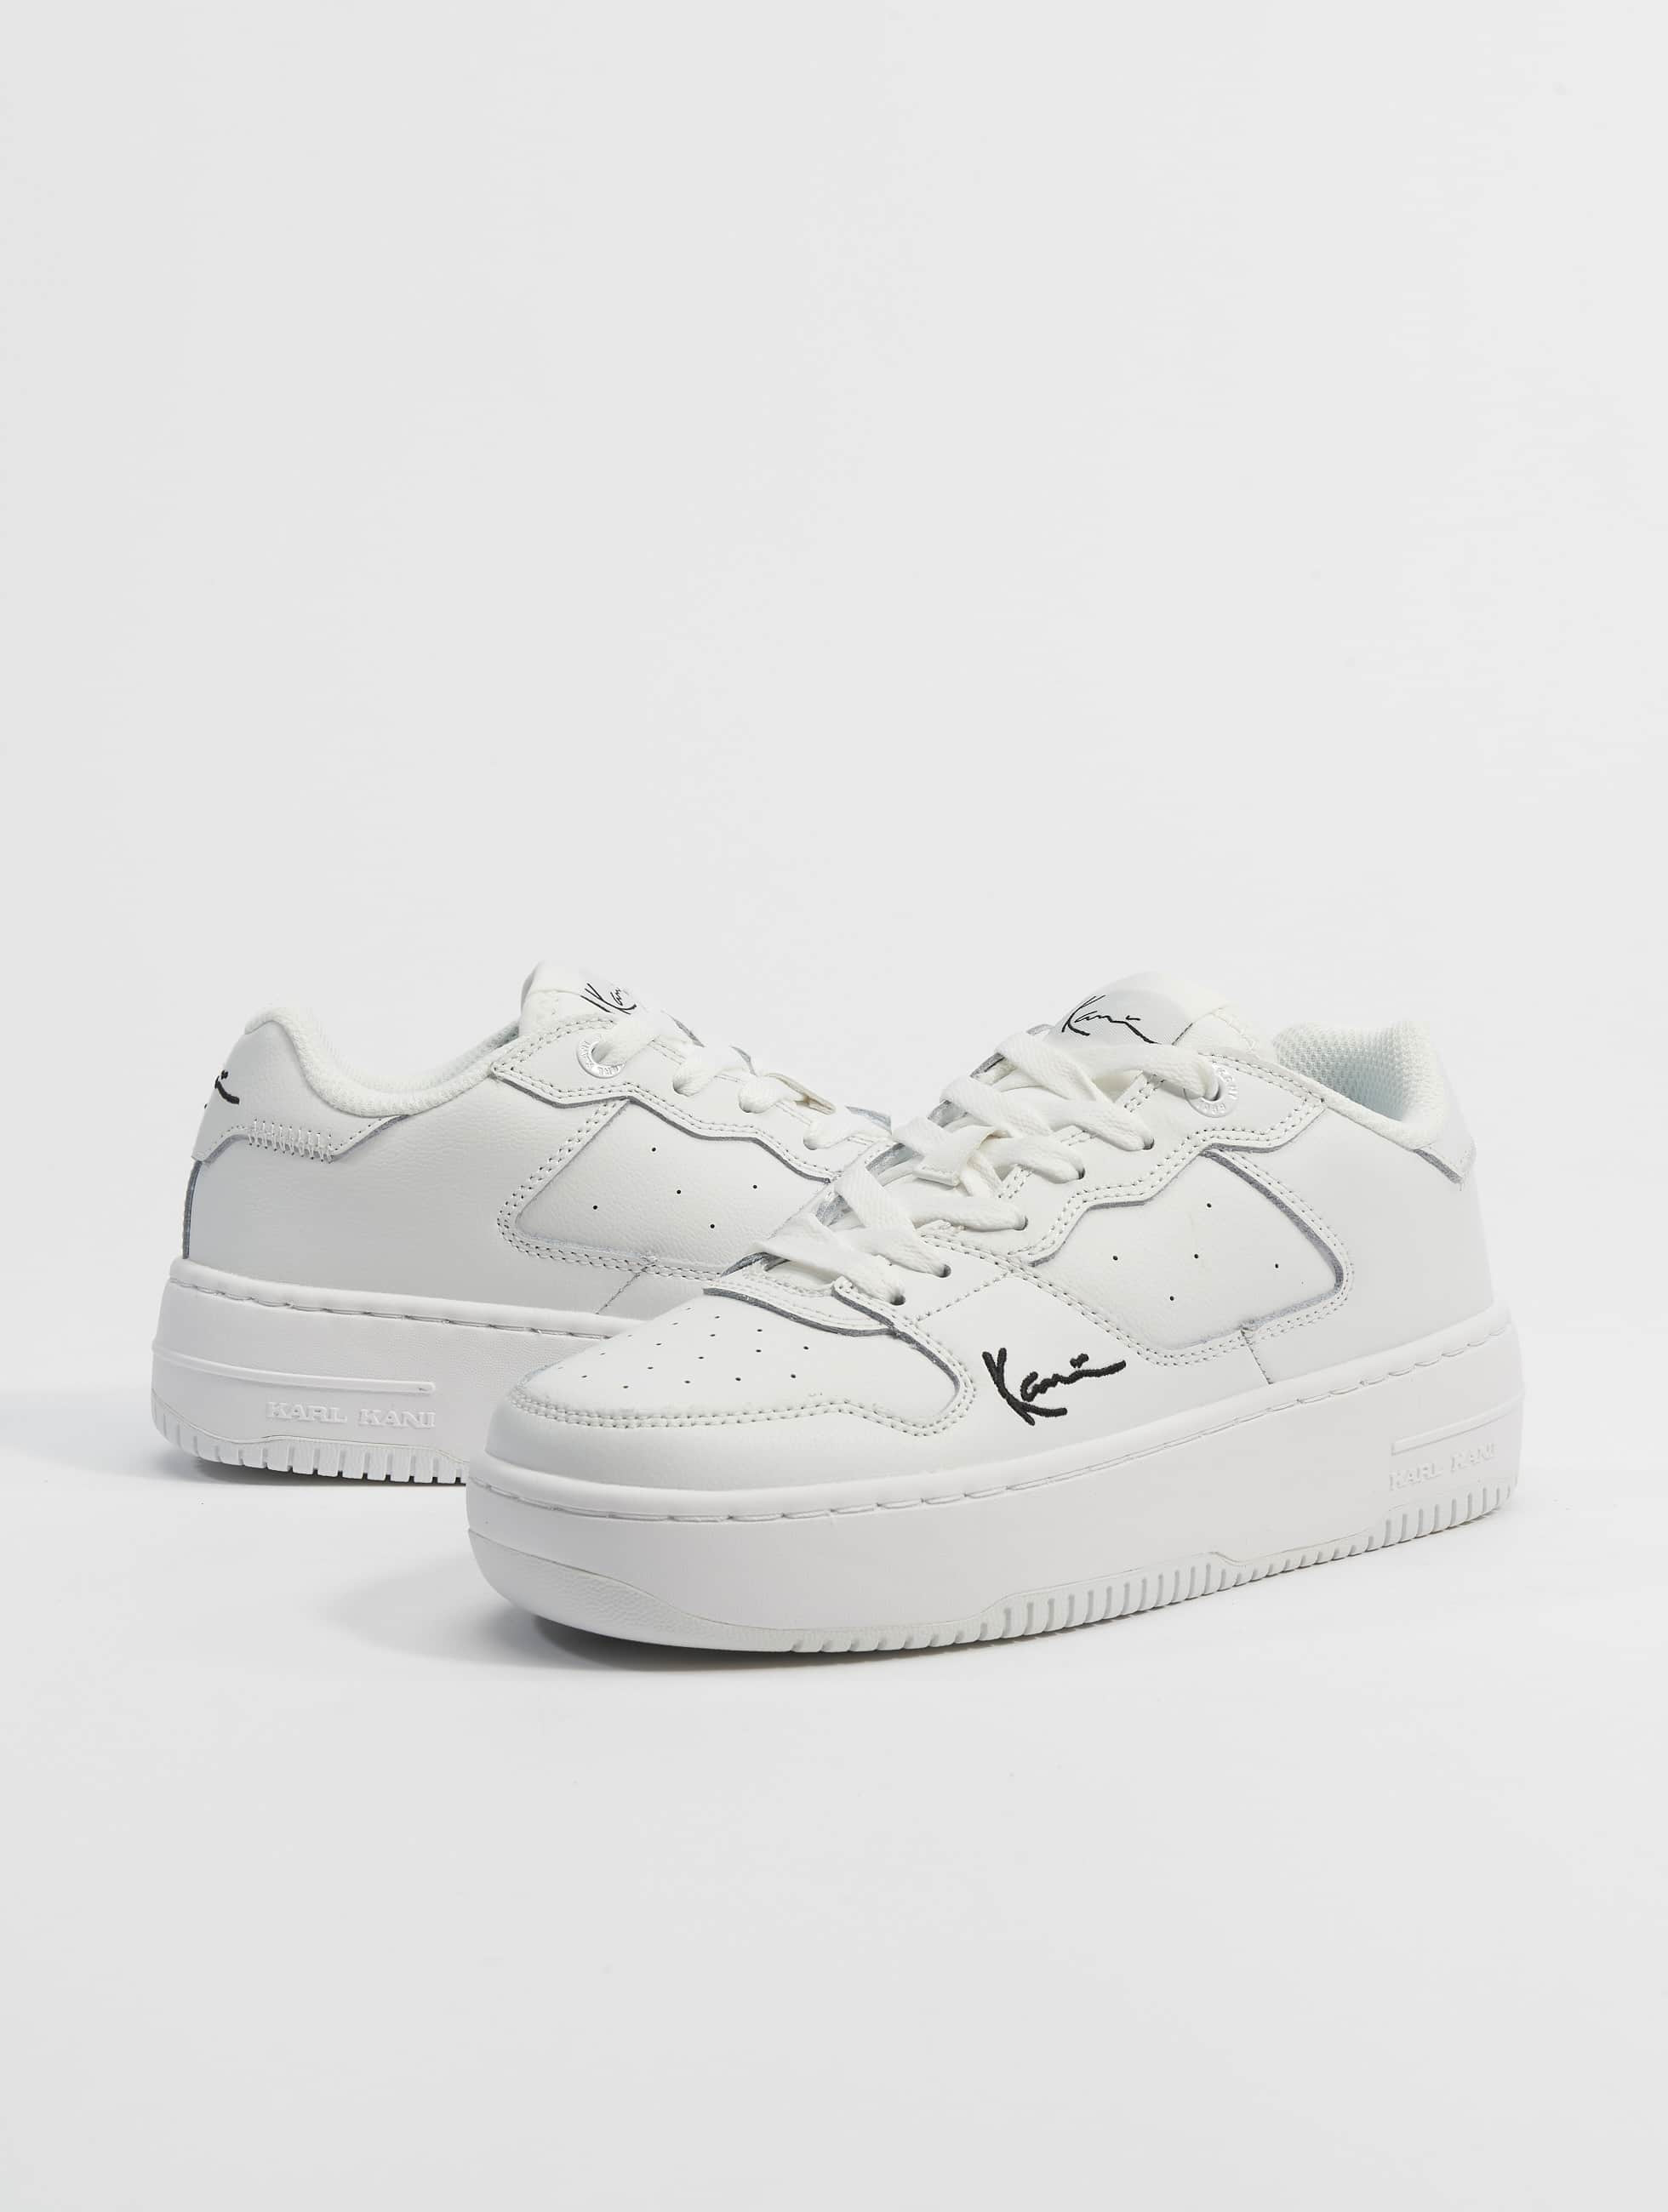 Karl Kani Shoe / Sneakers 89 UP in white 951441